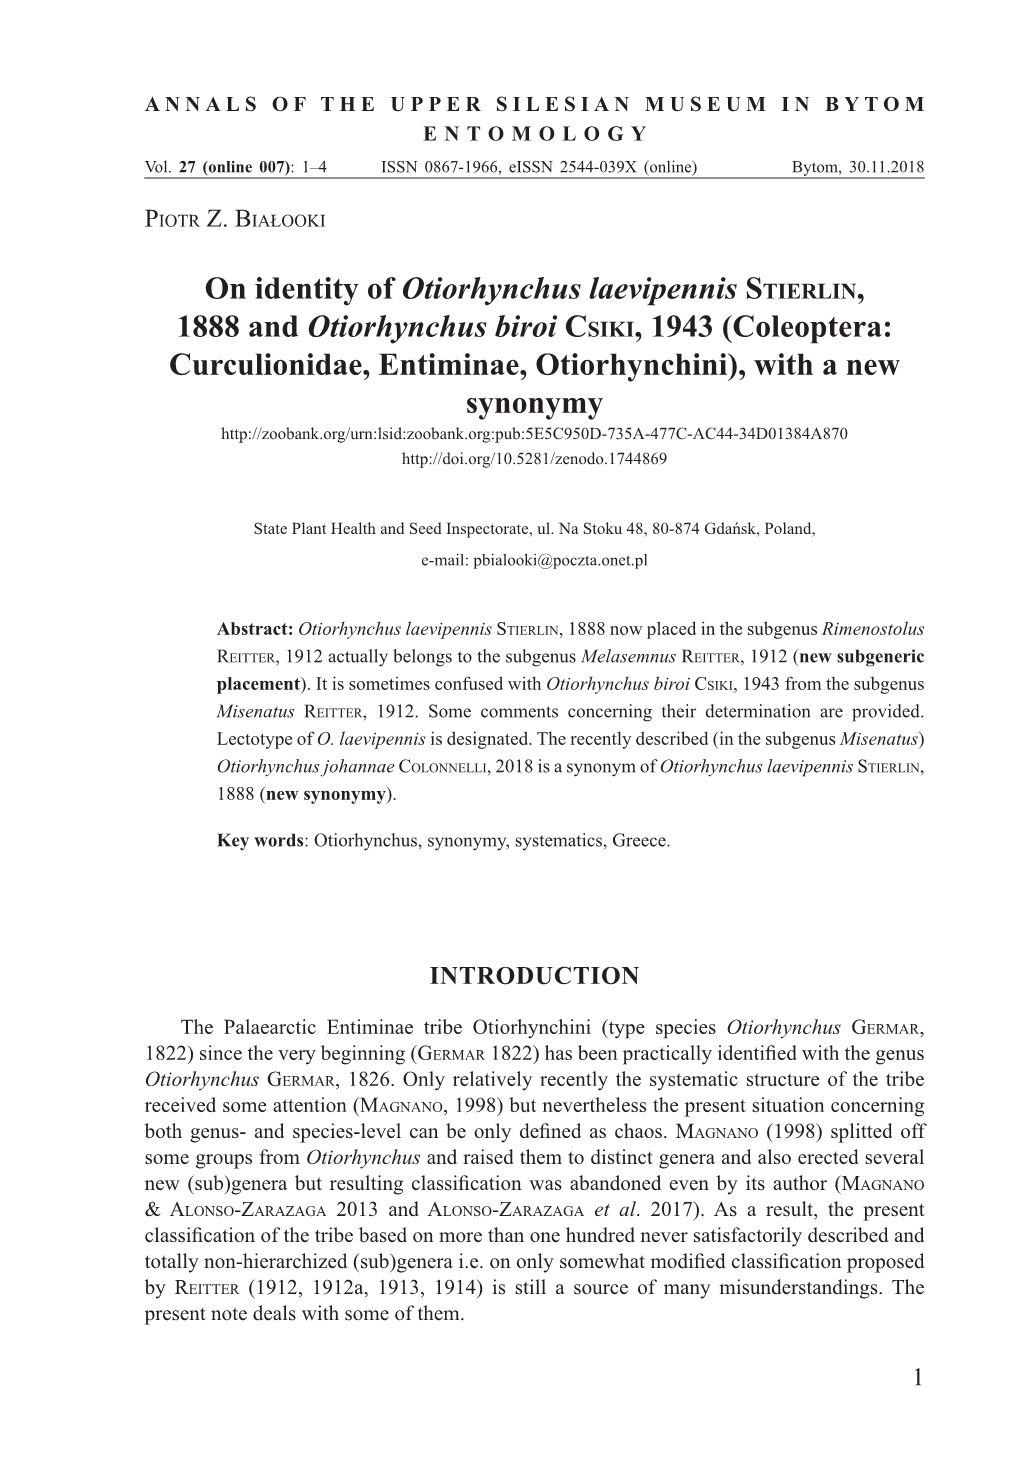 On Identity of Otiorhynchus Laevipennis Stierlin, 1888 And